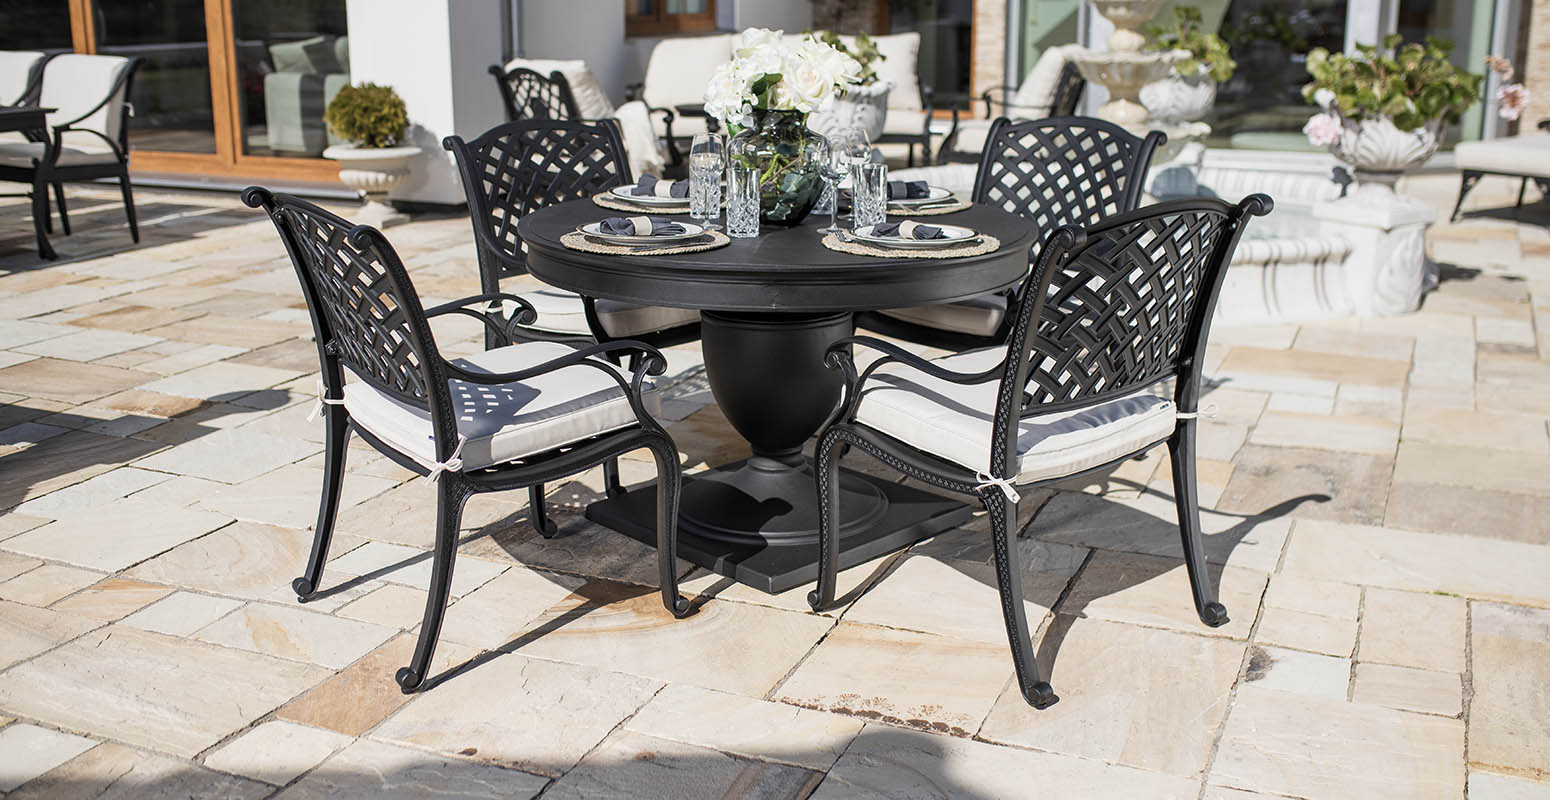 Exklusiv matgrupp utemöbler 4 stolar runt bord svart gjuten aluminium Salerno